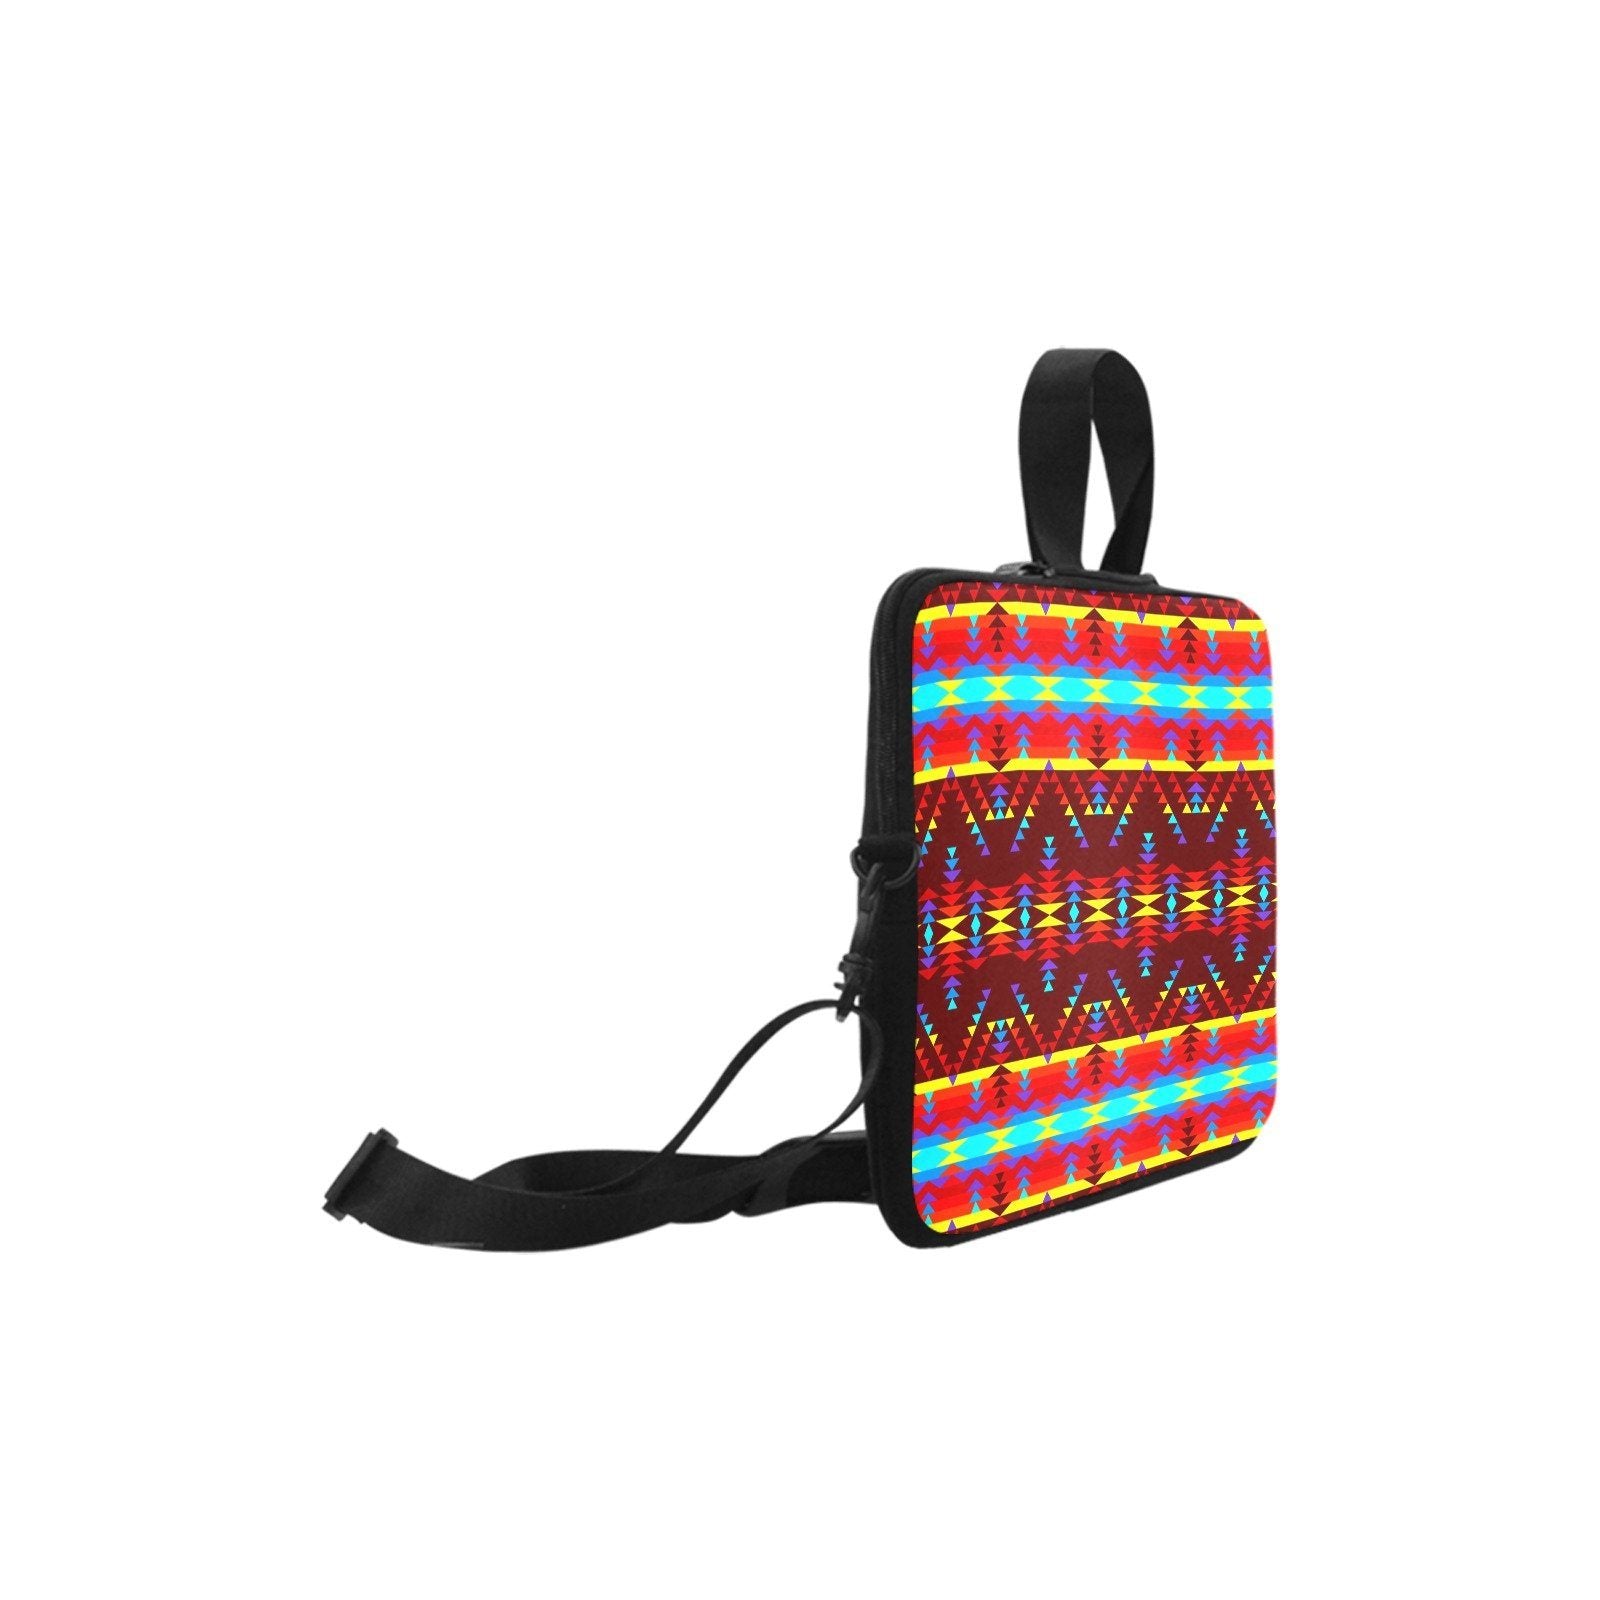 Visions of Lasting Peace Laptop Handbags 17" bag e-joyer 